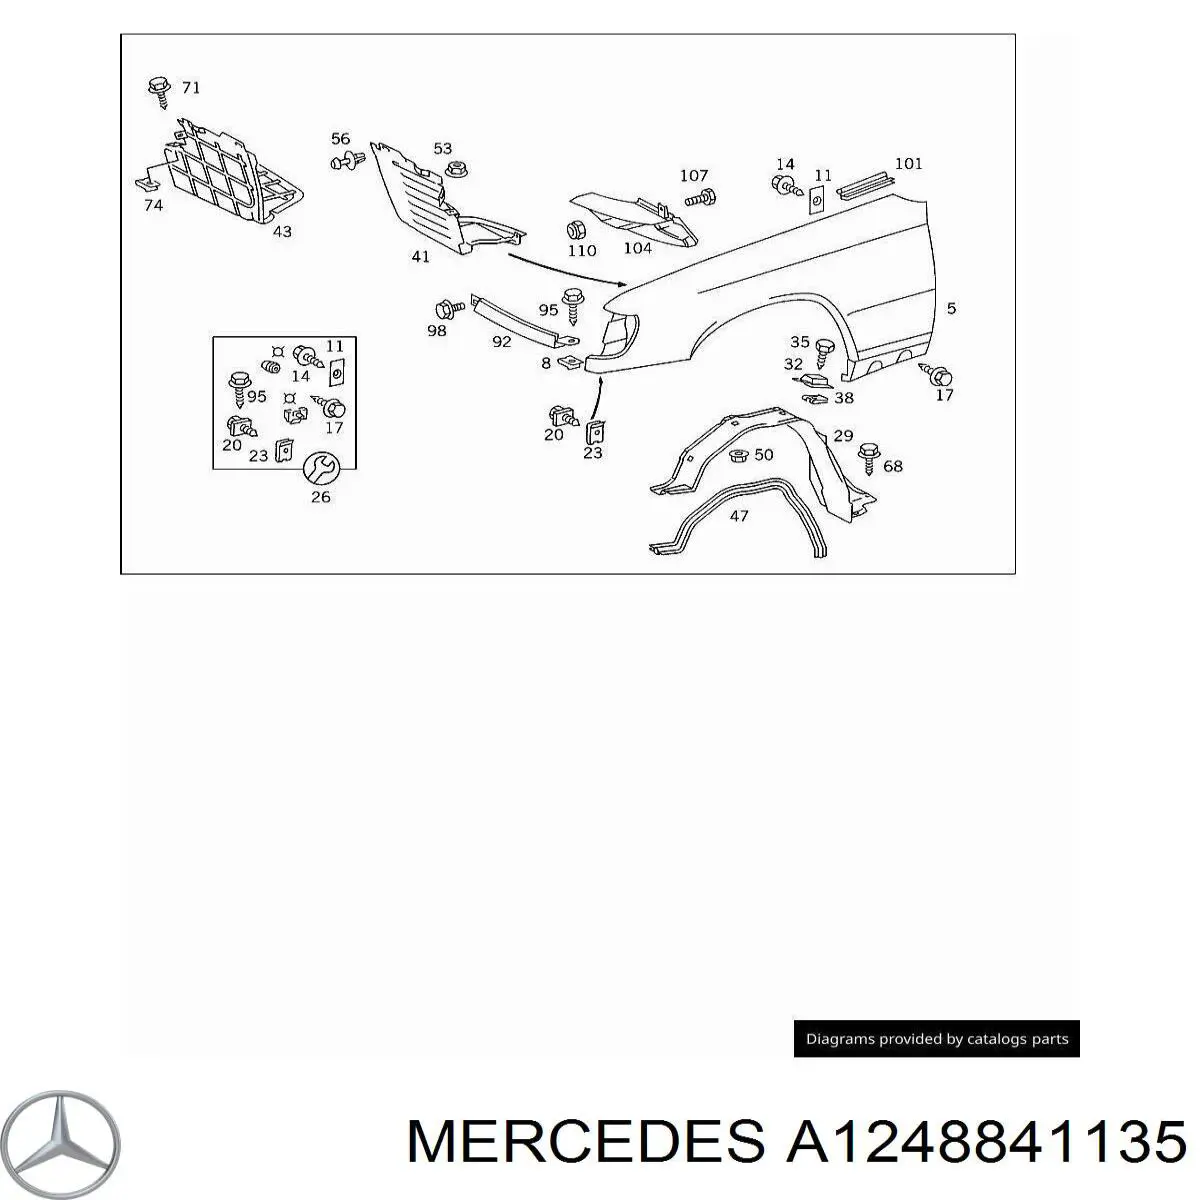 A1248841135 Mercedes